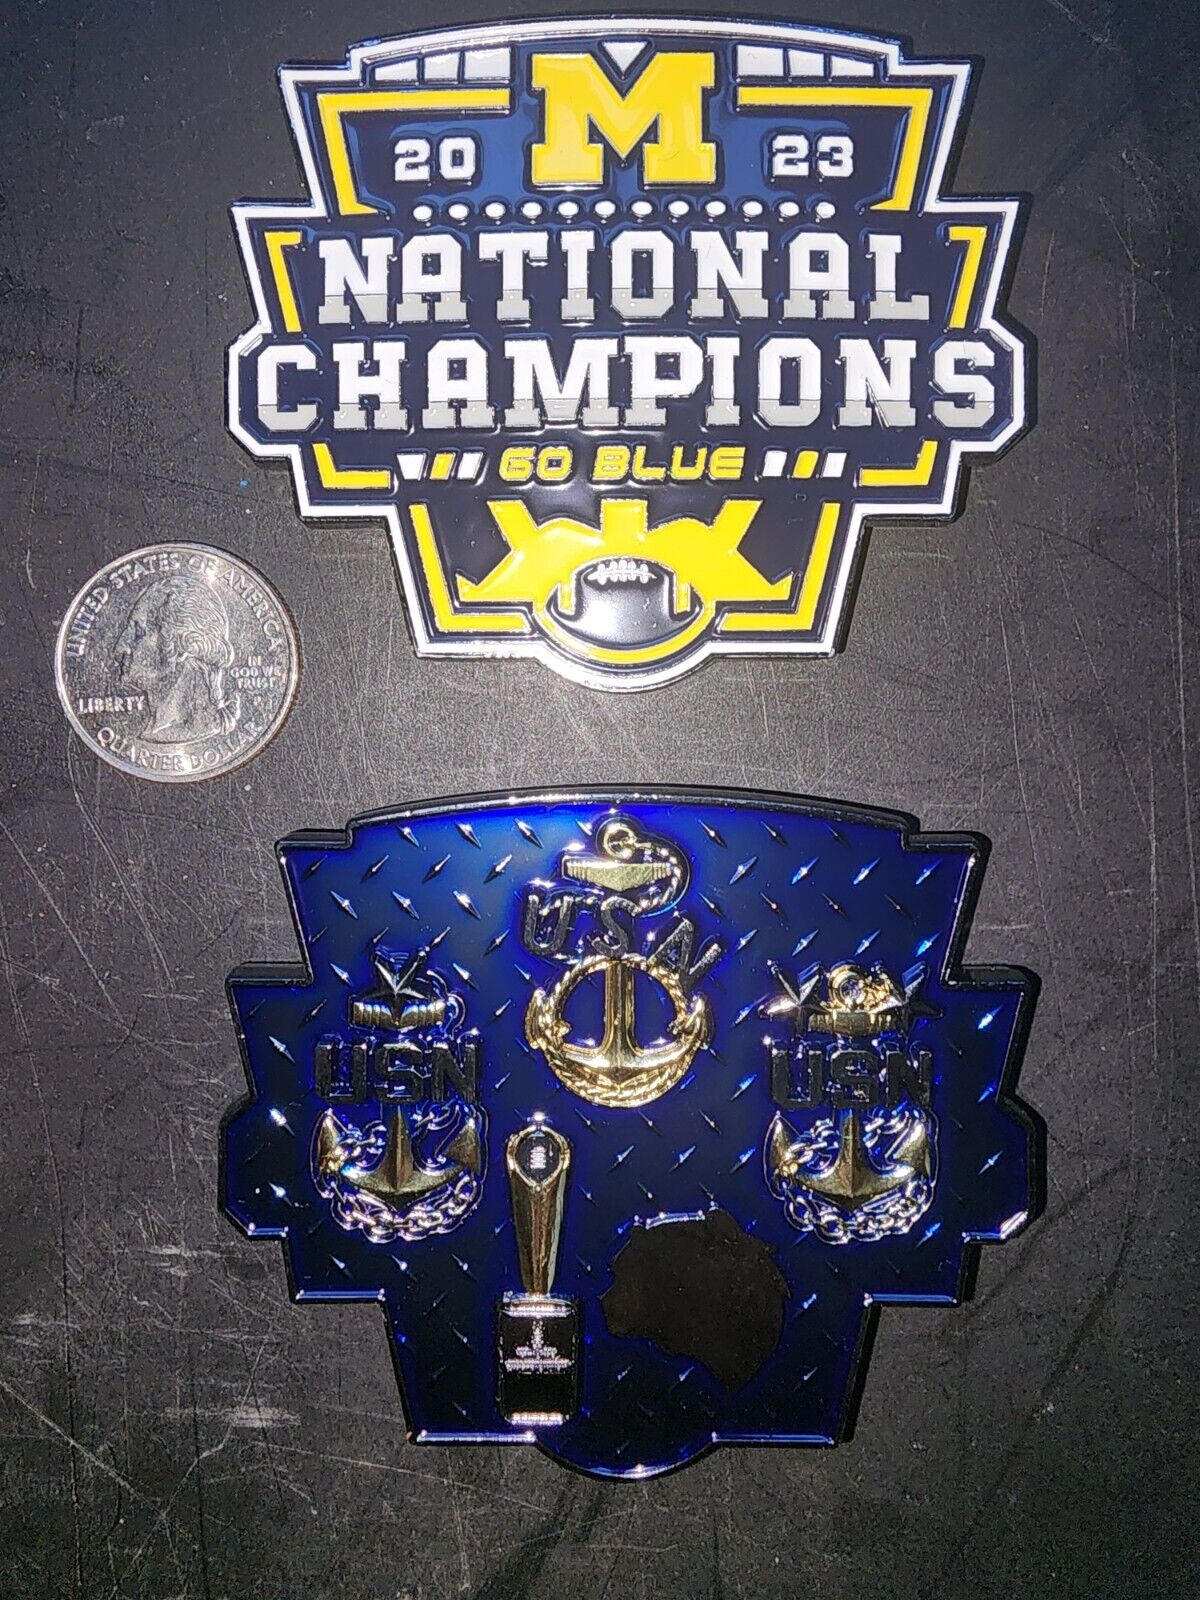 Michigan Wolverines National Championship CPO Coin